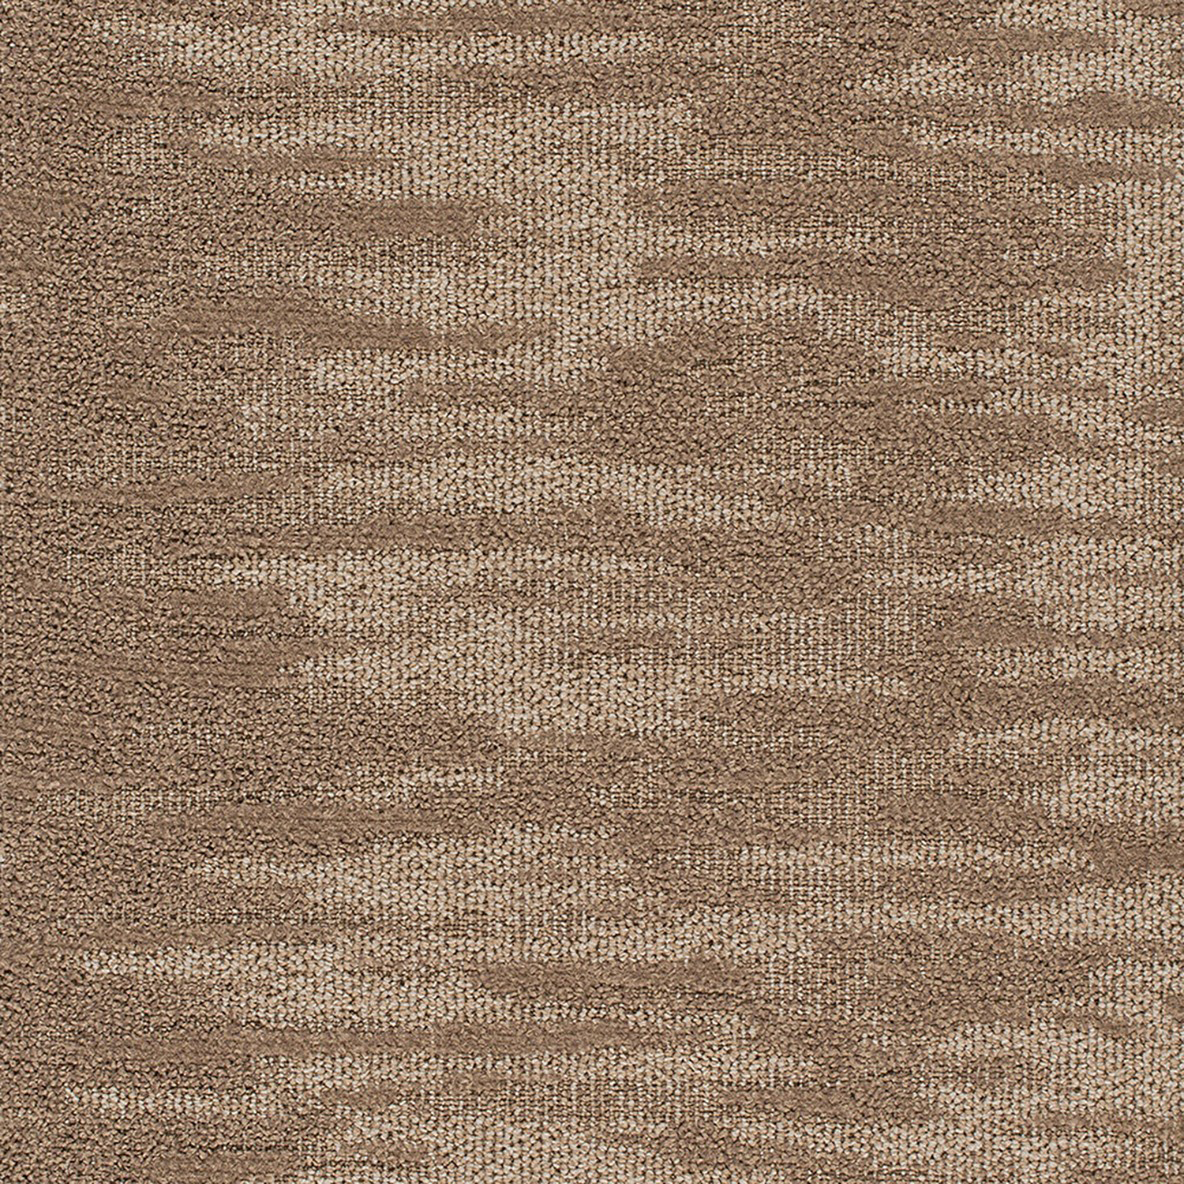 Nautilus color close up Up and Away Commercial Carpet Tile .30 Inch x 50x50 cm per Tile